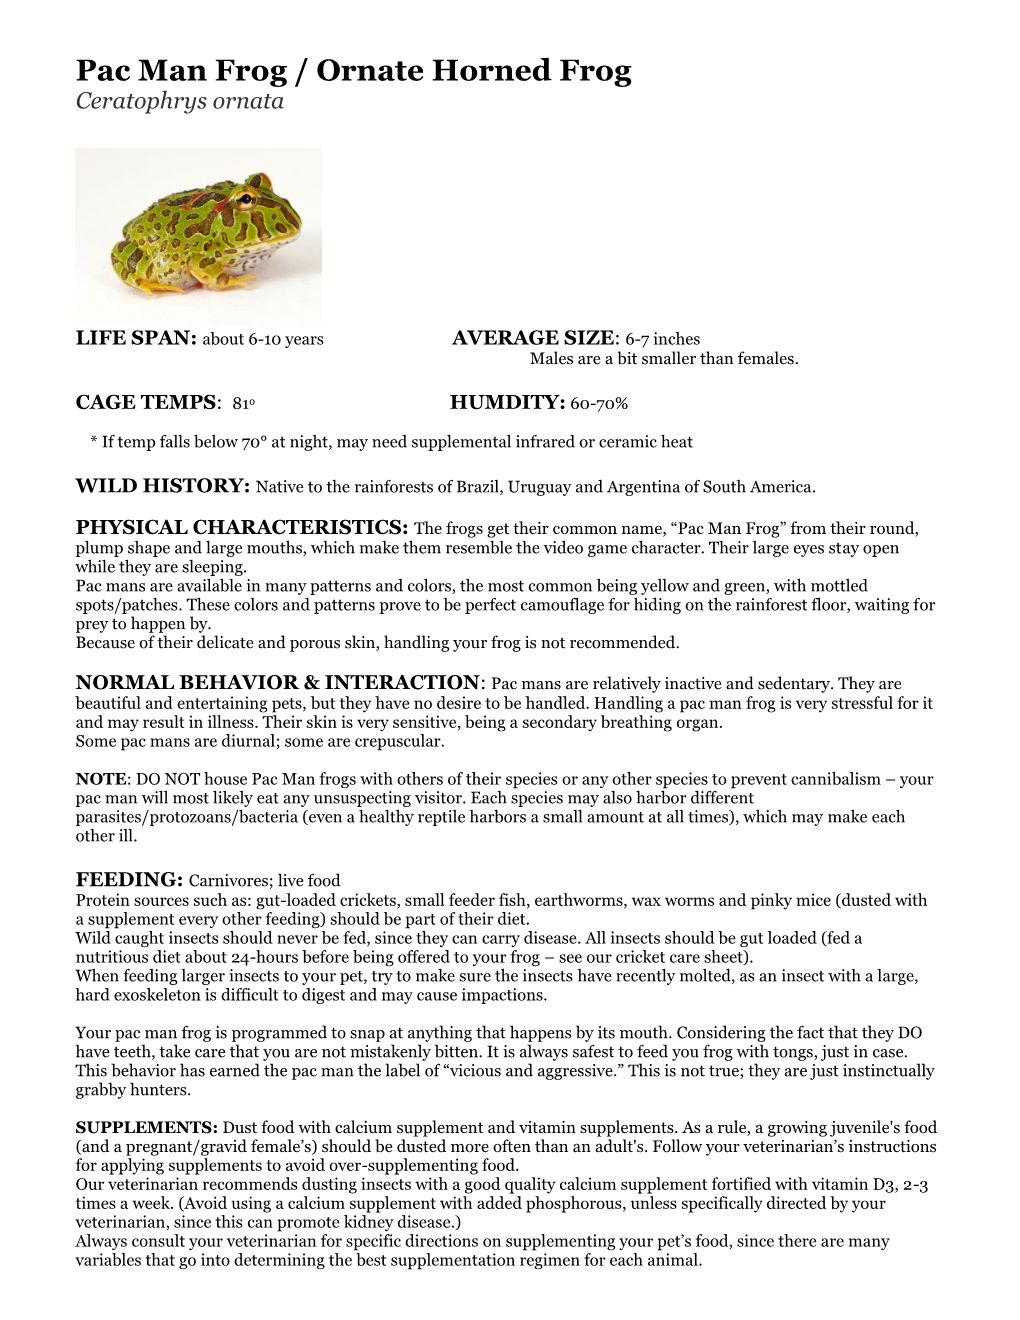 Pac Man Frog / Ornate Horned Frog Ceratophrys Ornata